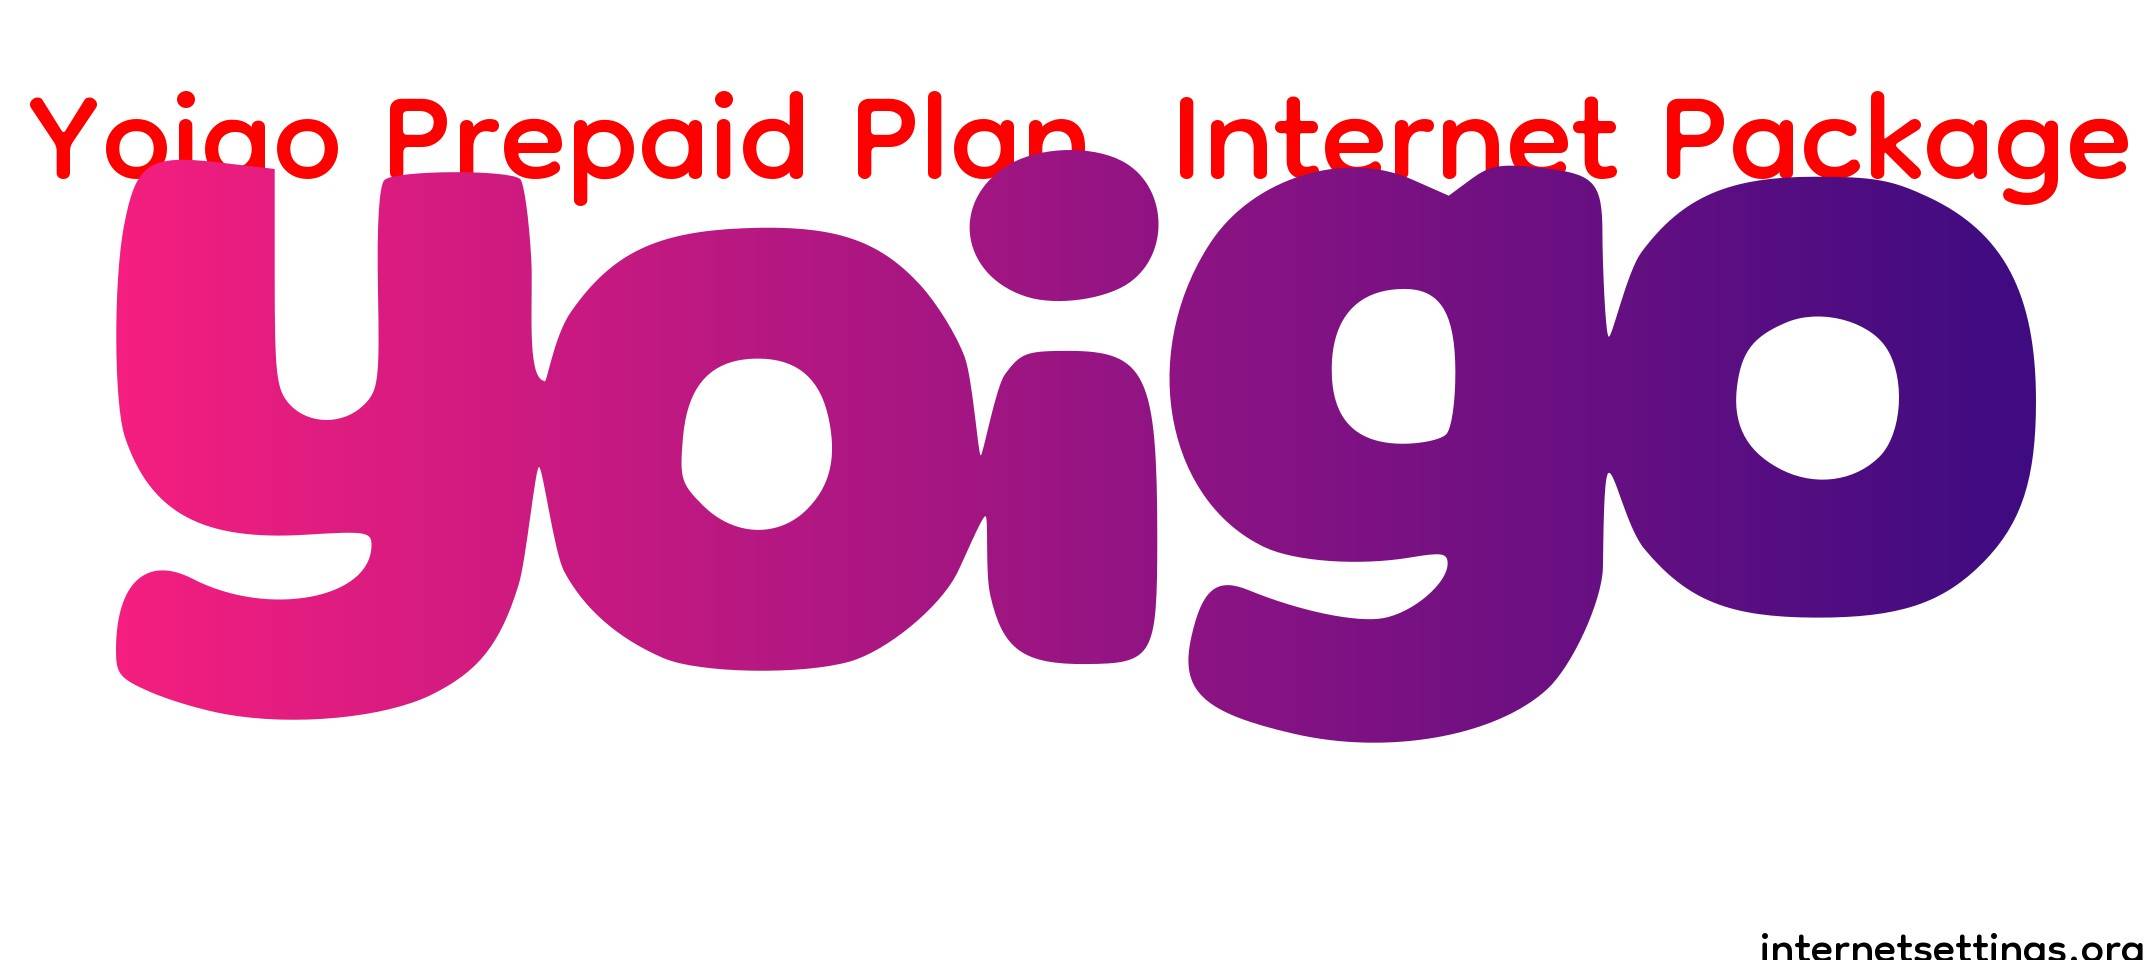 Yoigo Prepaid Plan Internet Package